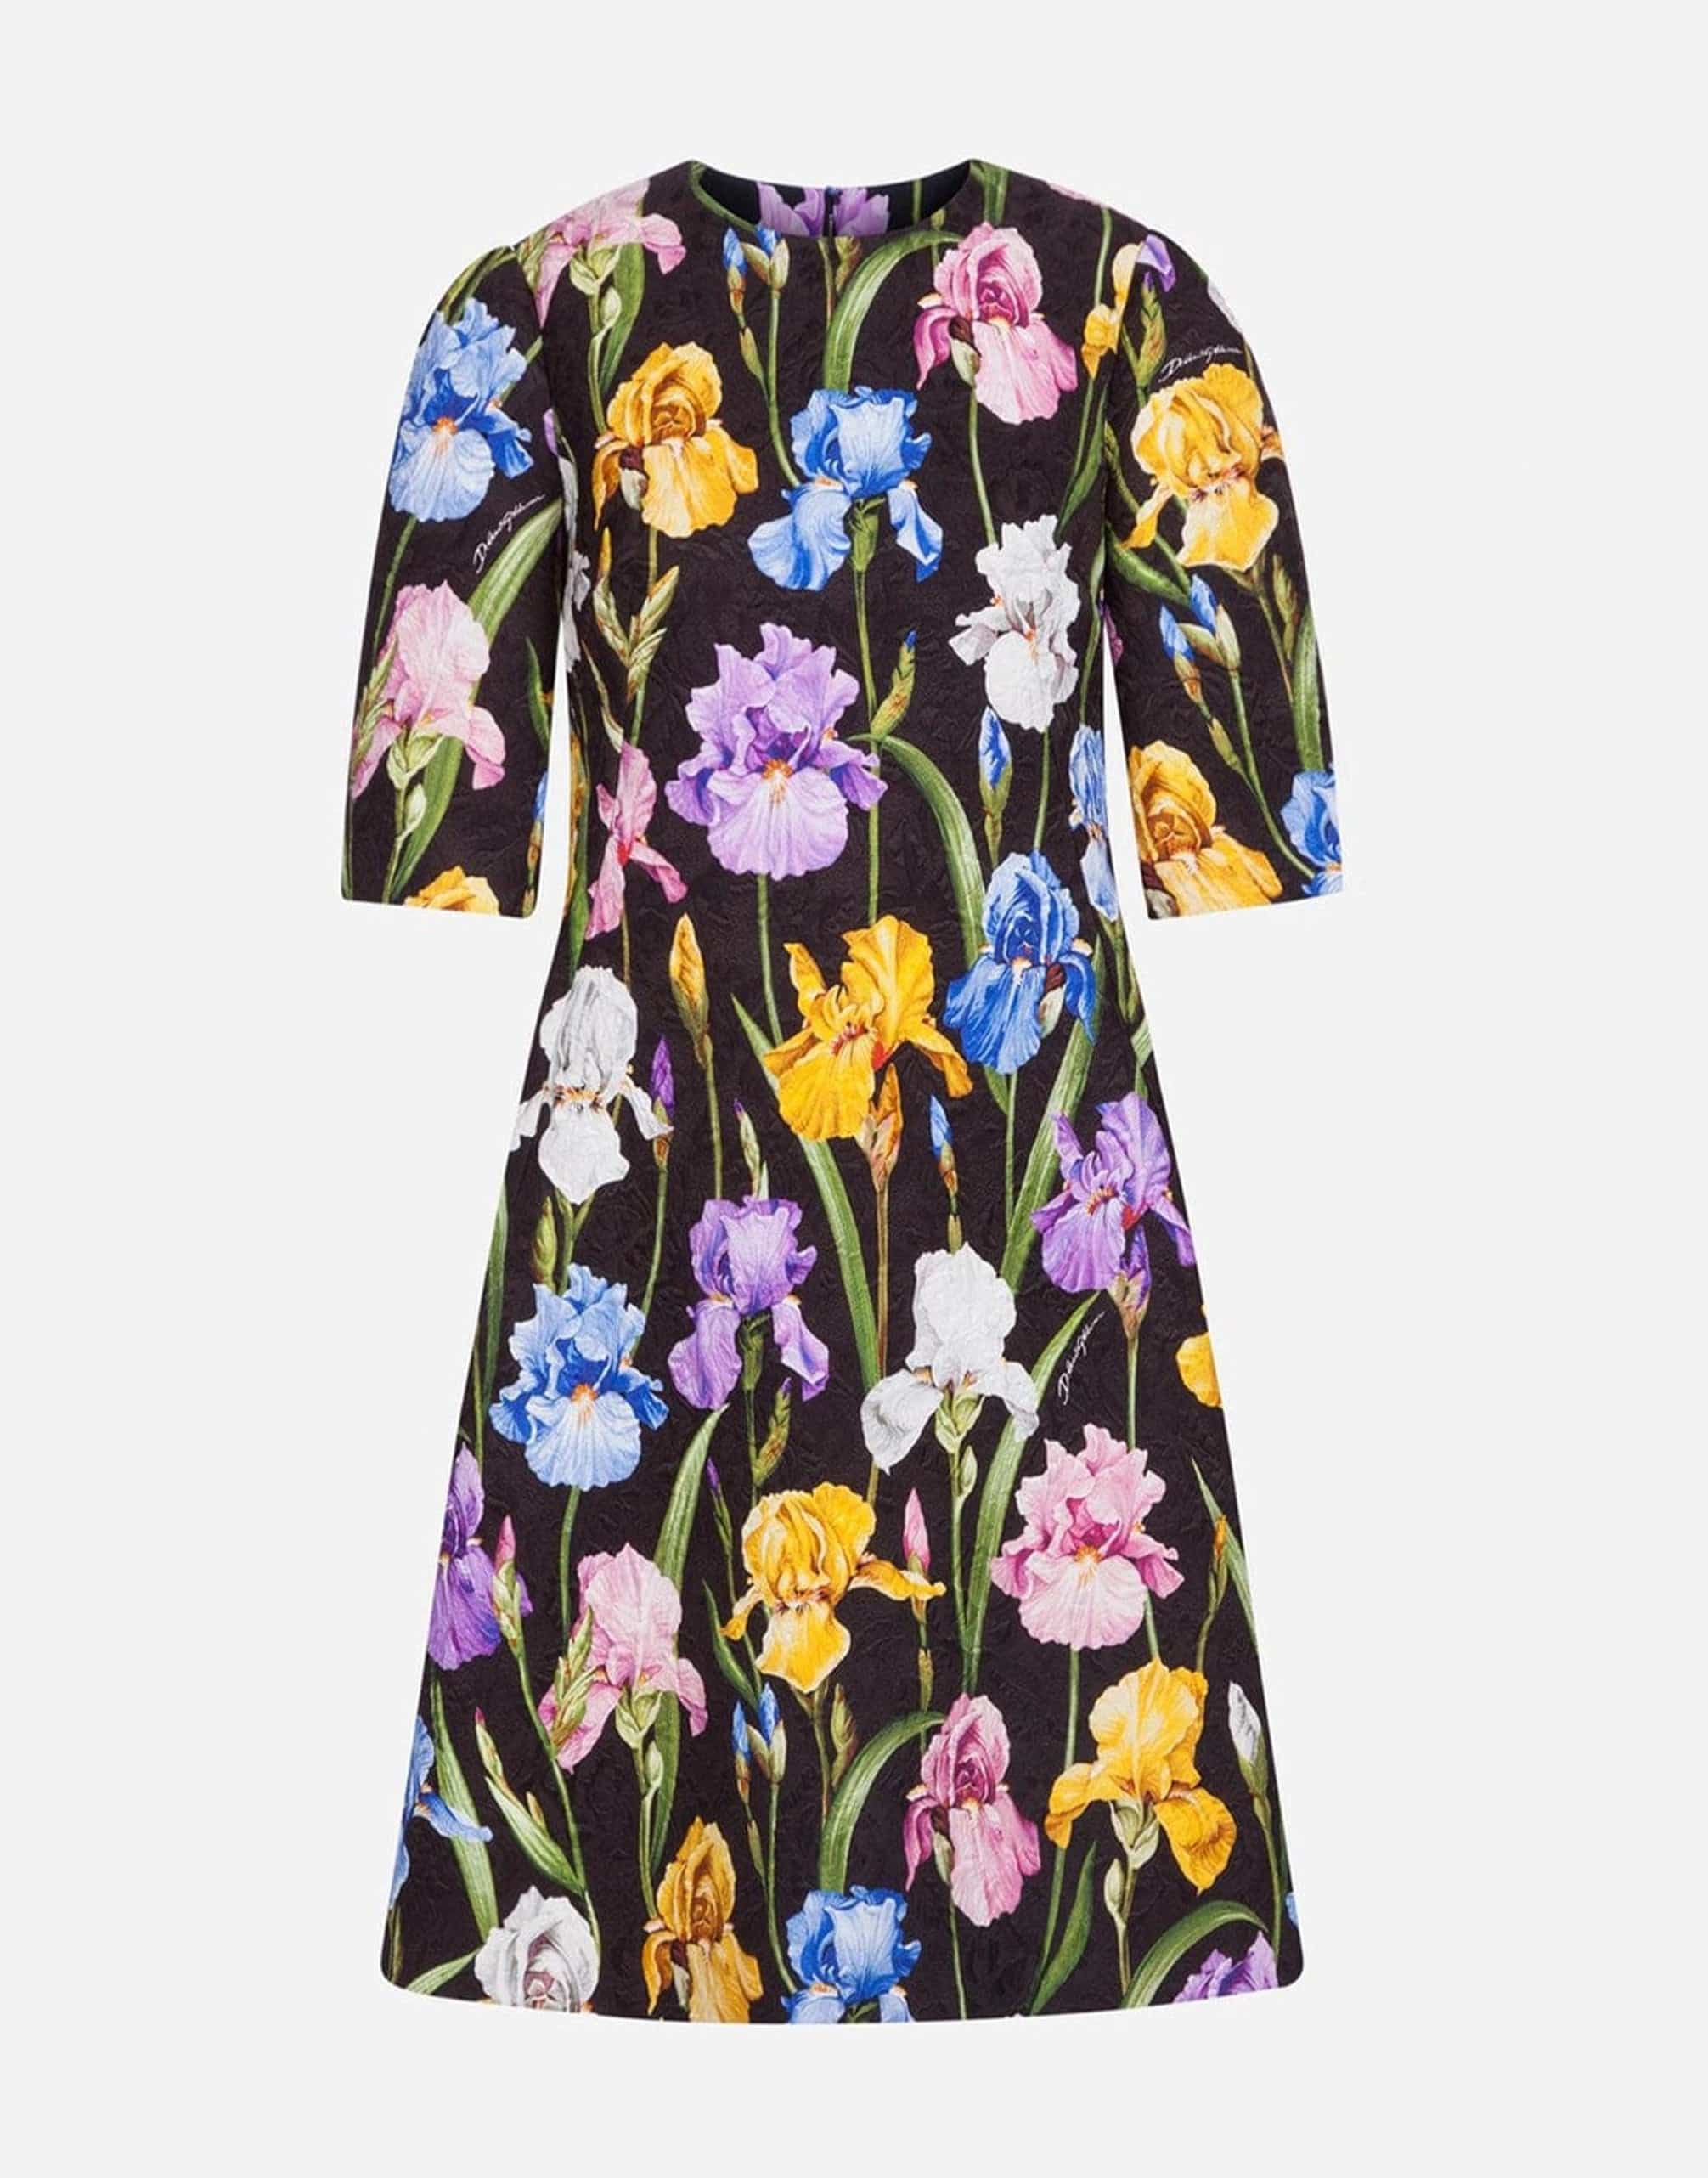 Dolce & Gabbana Iris-Print A-Line Brocade Dress